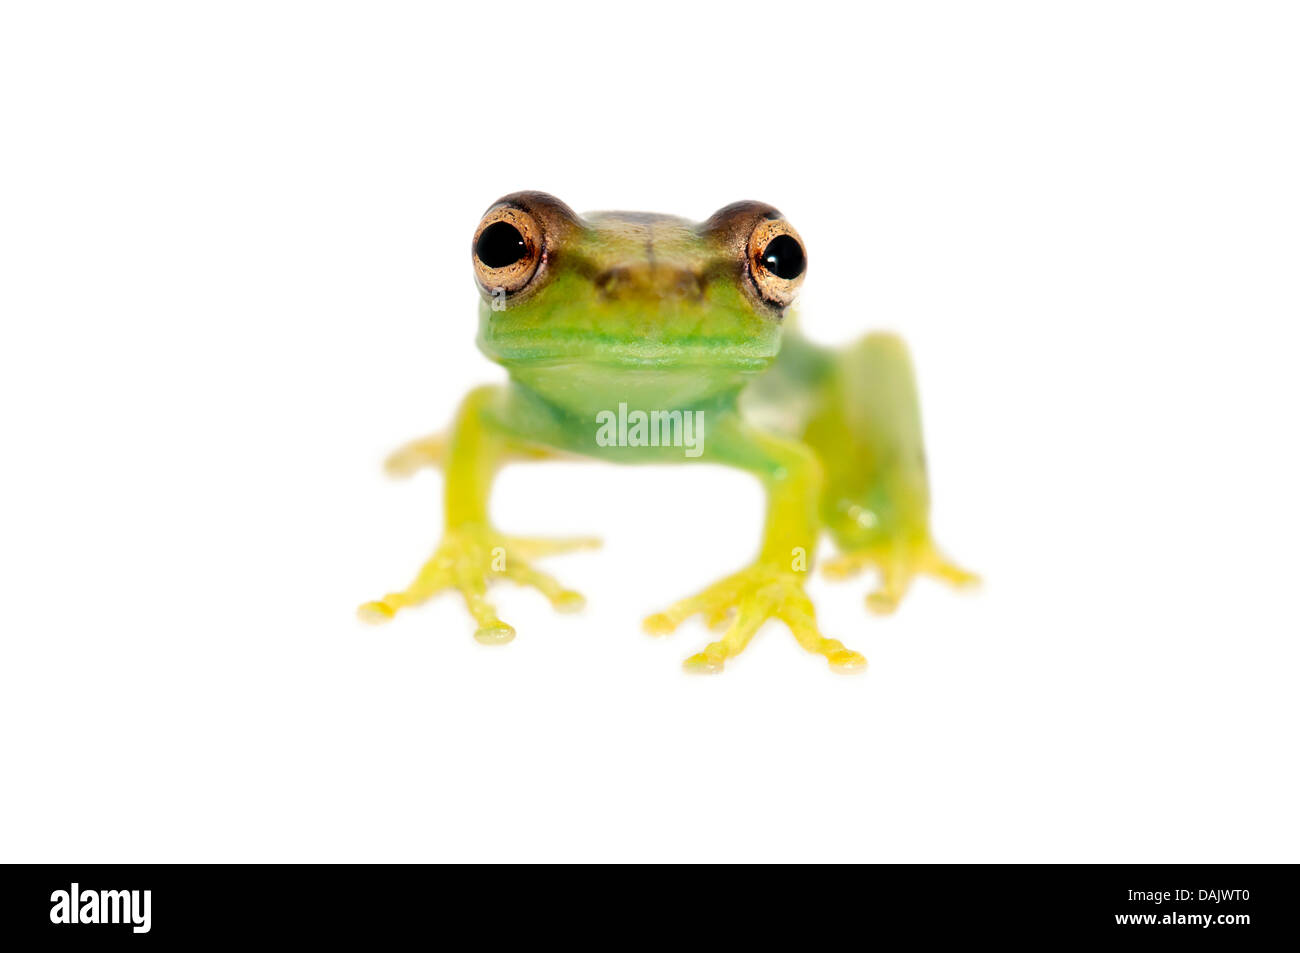 Young Orinoco Lime Tree Frog (Sphaenorhynchus lacteus) Stock Photo